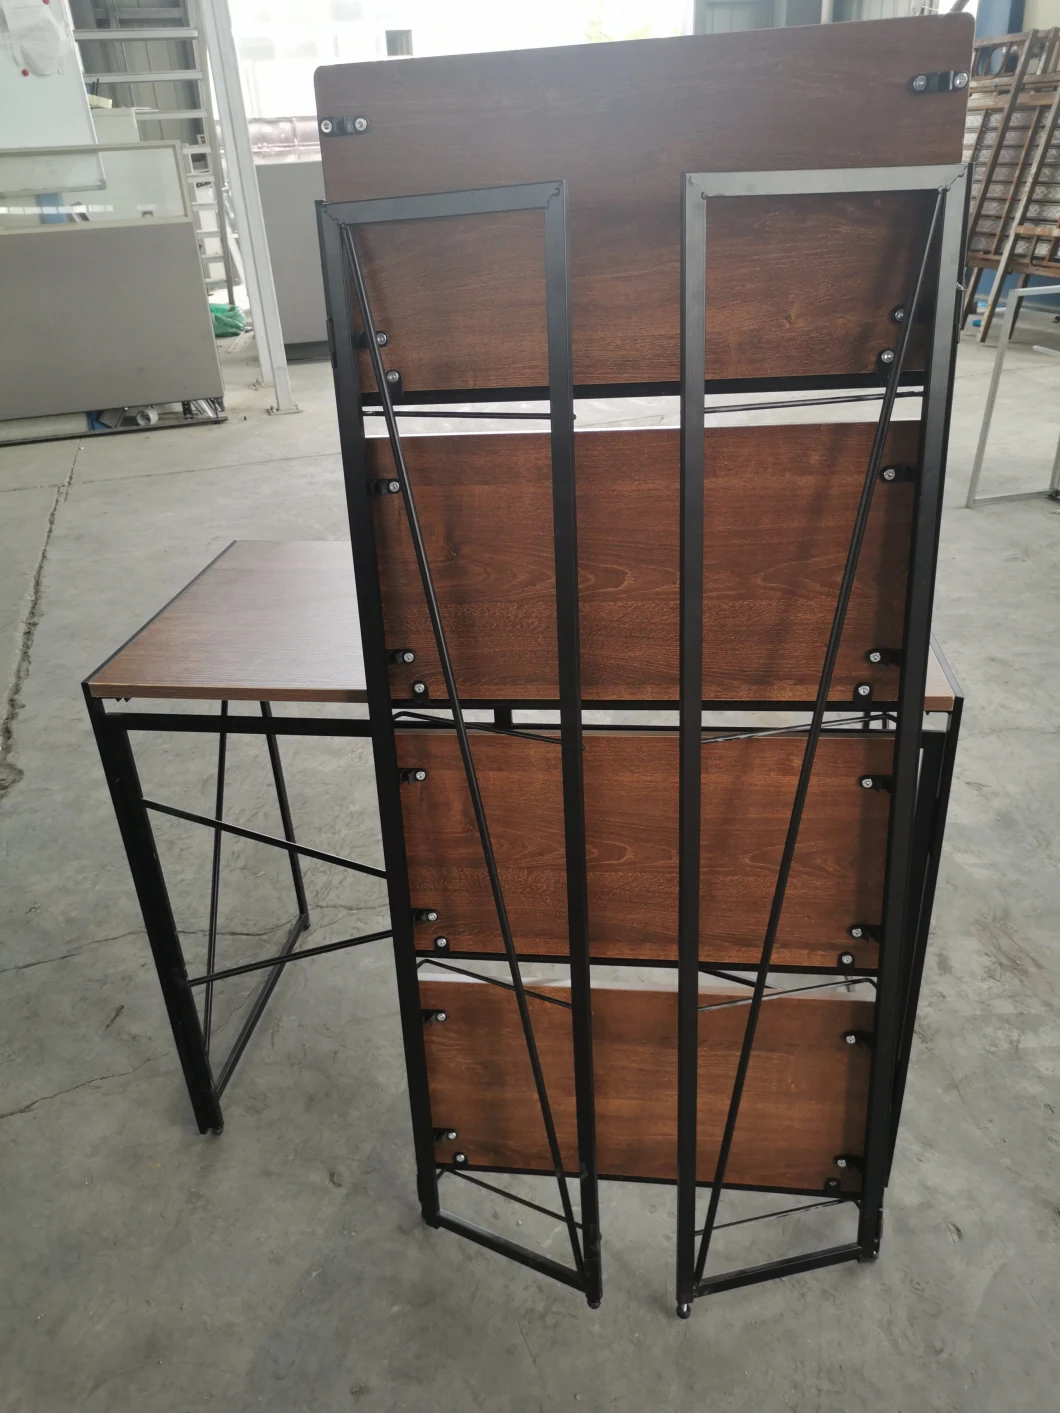 L-Shaped Design Foldable Wooden MFC Bookshelf for Office Home Furniture Use